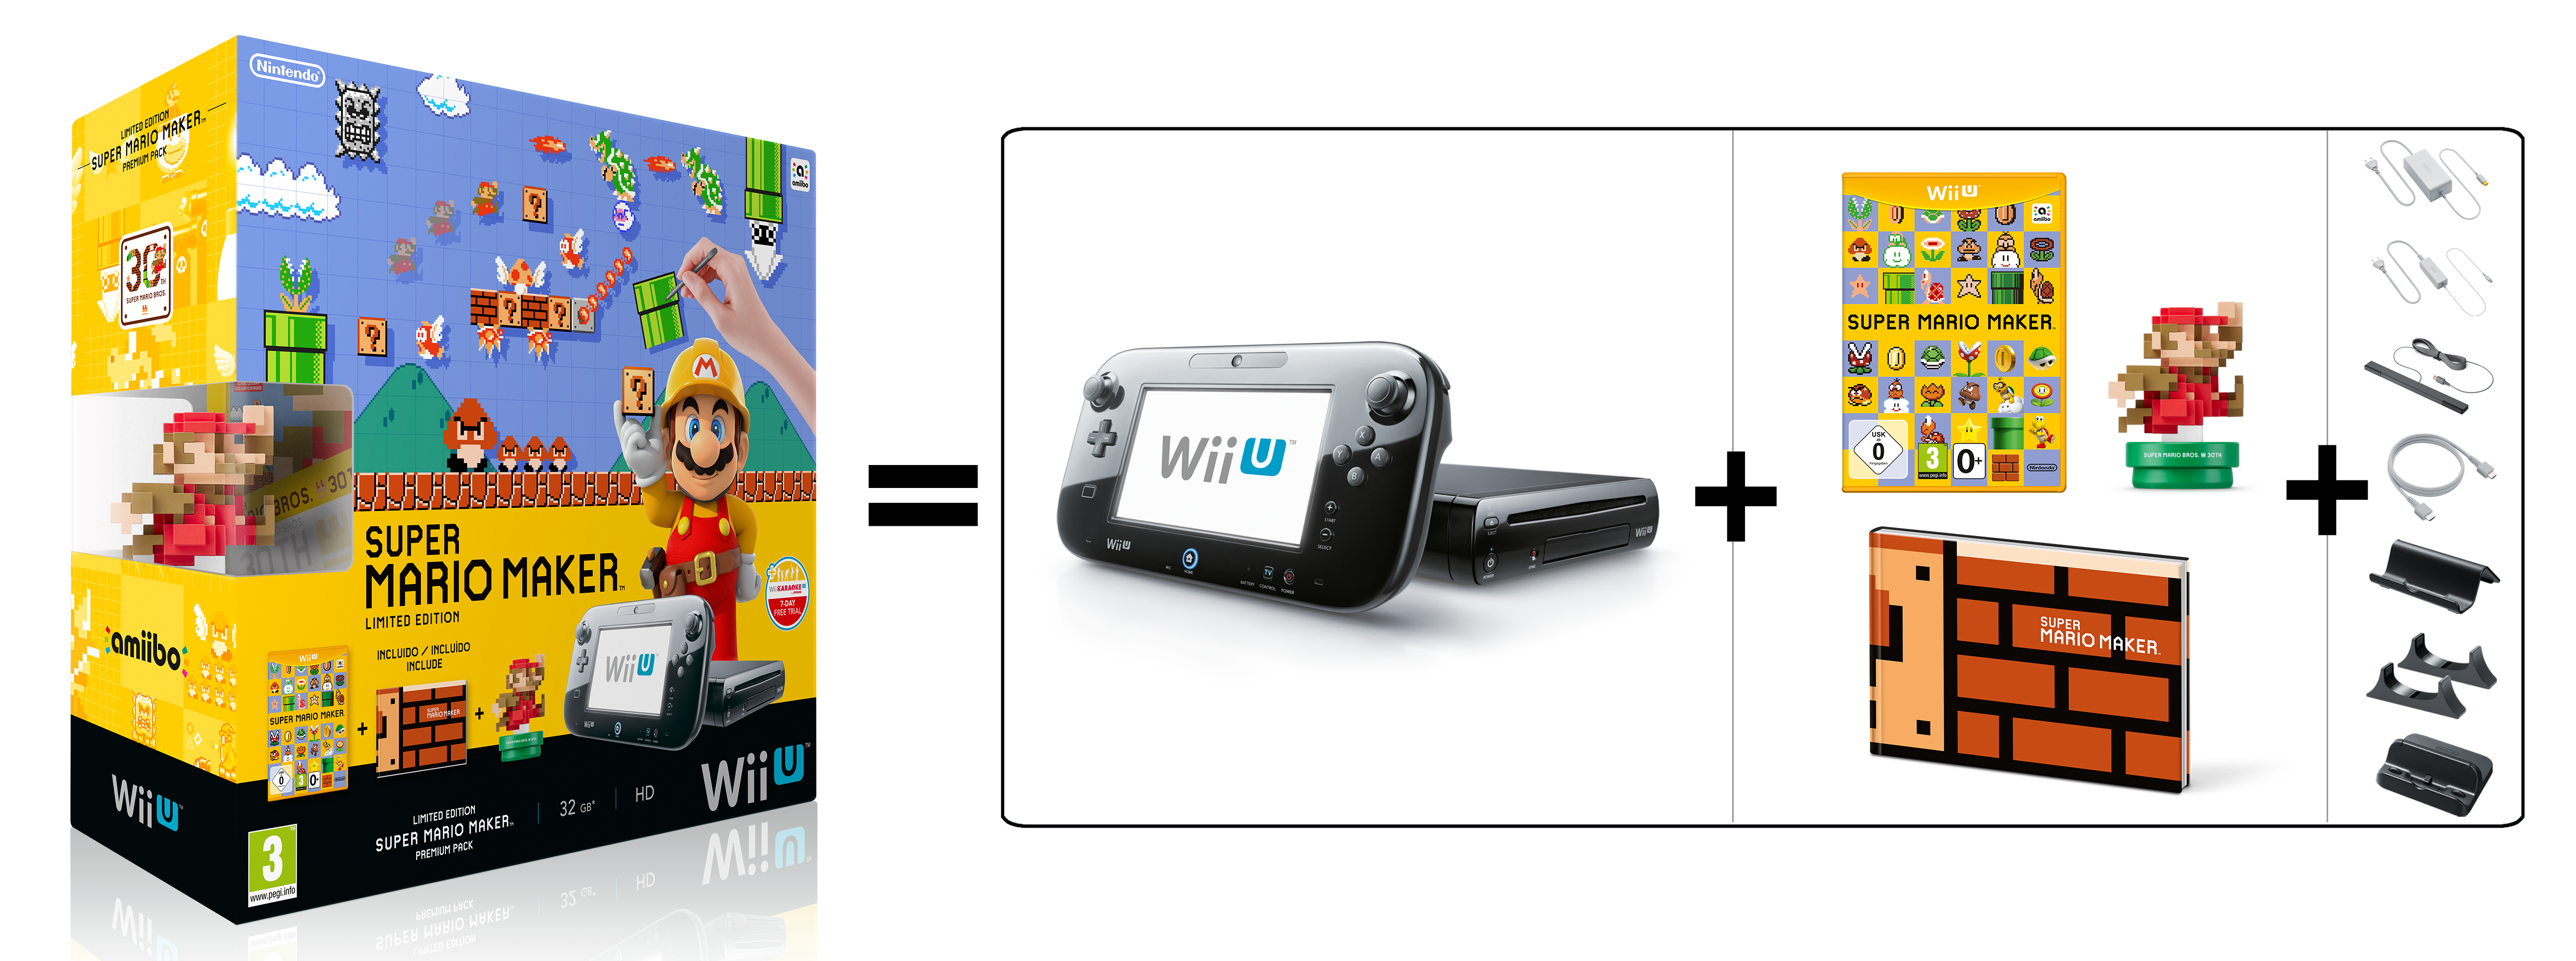 Mario maker wii. Приставка Нинтендо super Mario maker. Super Mario maker Wii u. Super Mario maker Wii u набор. Super Mario maker 3 для Nintendo Switch.